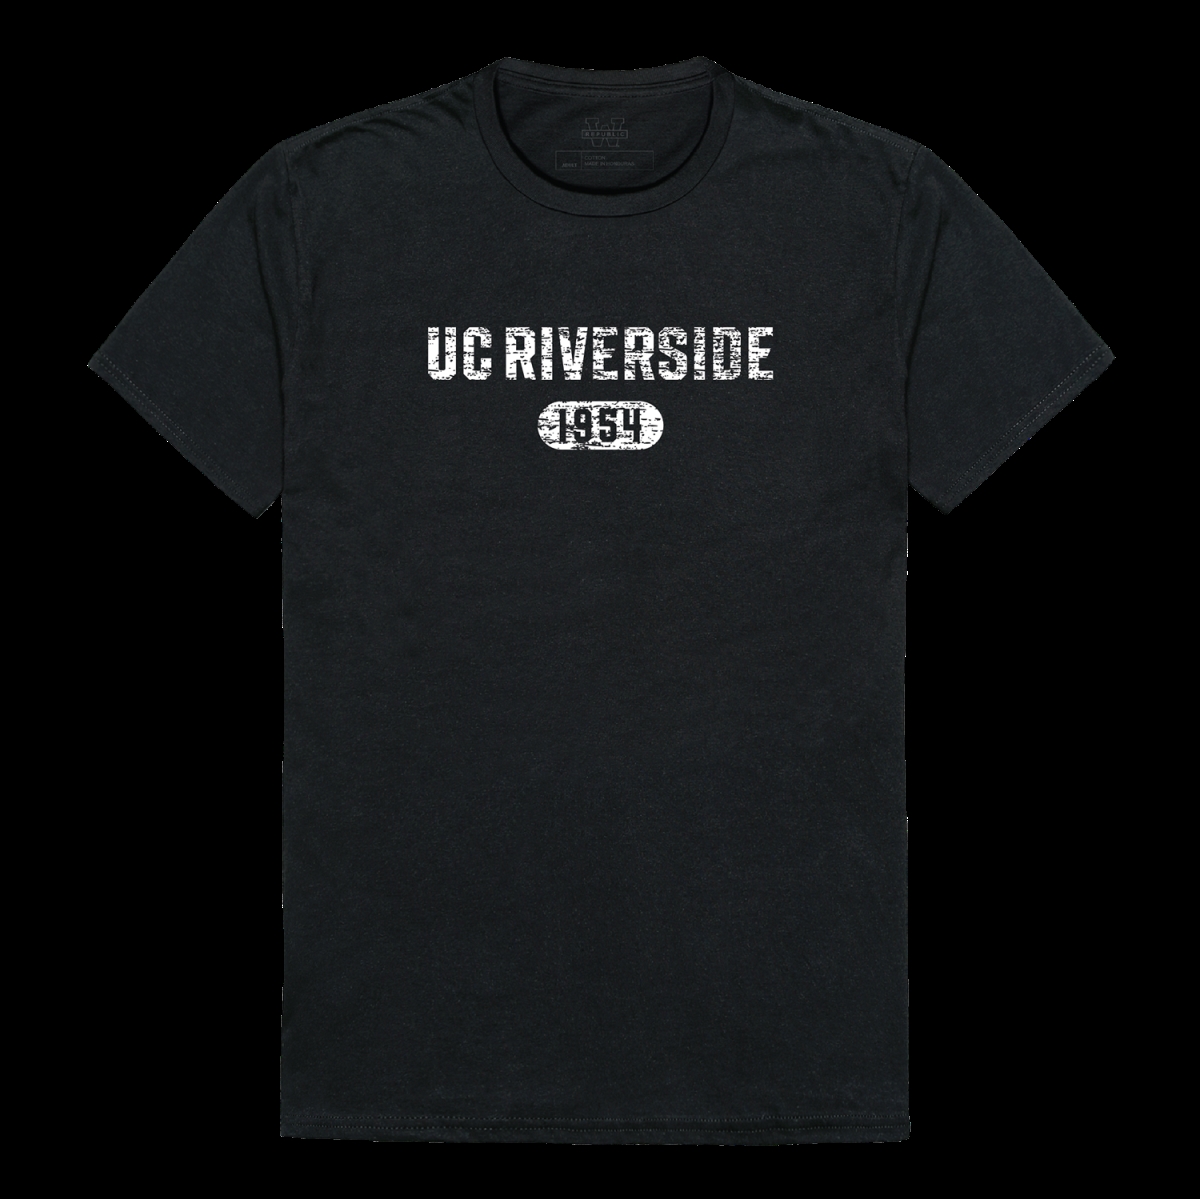 574-111-BLK-02 University of California, Riverside The Highlanders Distressed Arch College T-Shirt, Black - Medium -  W Republic